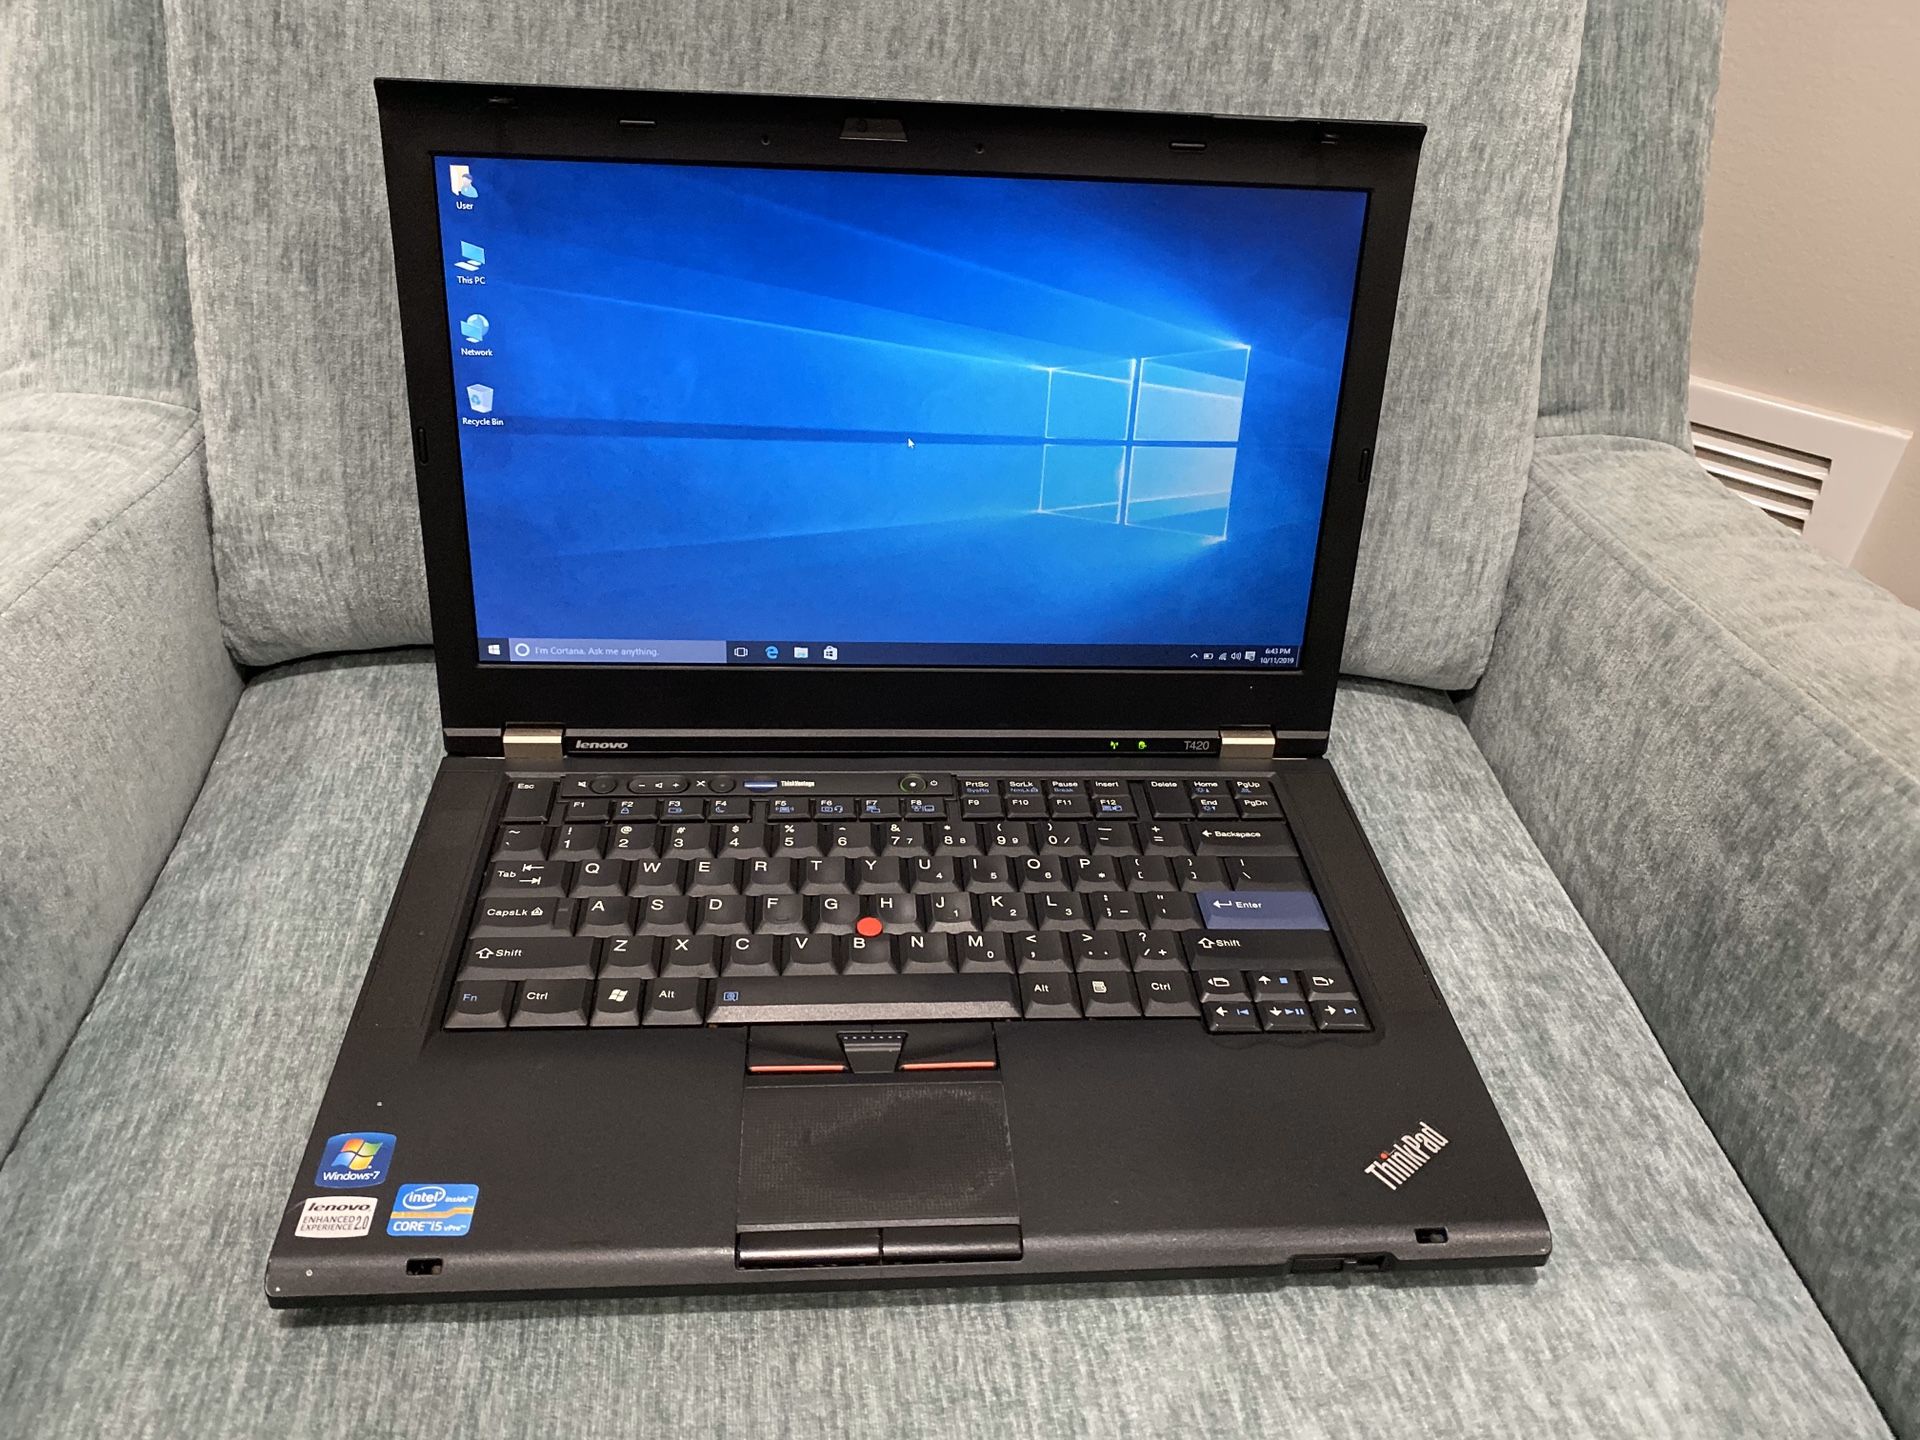 Lenovo ThinkPad T420 Laptop 2.5ghz Core i5 4gb RAM 250gb HD Windows 10 Pro